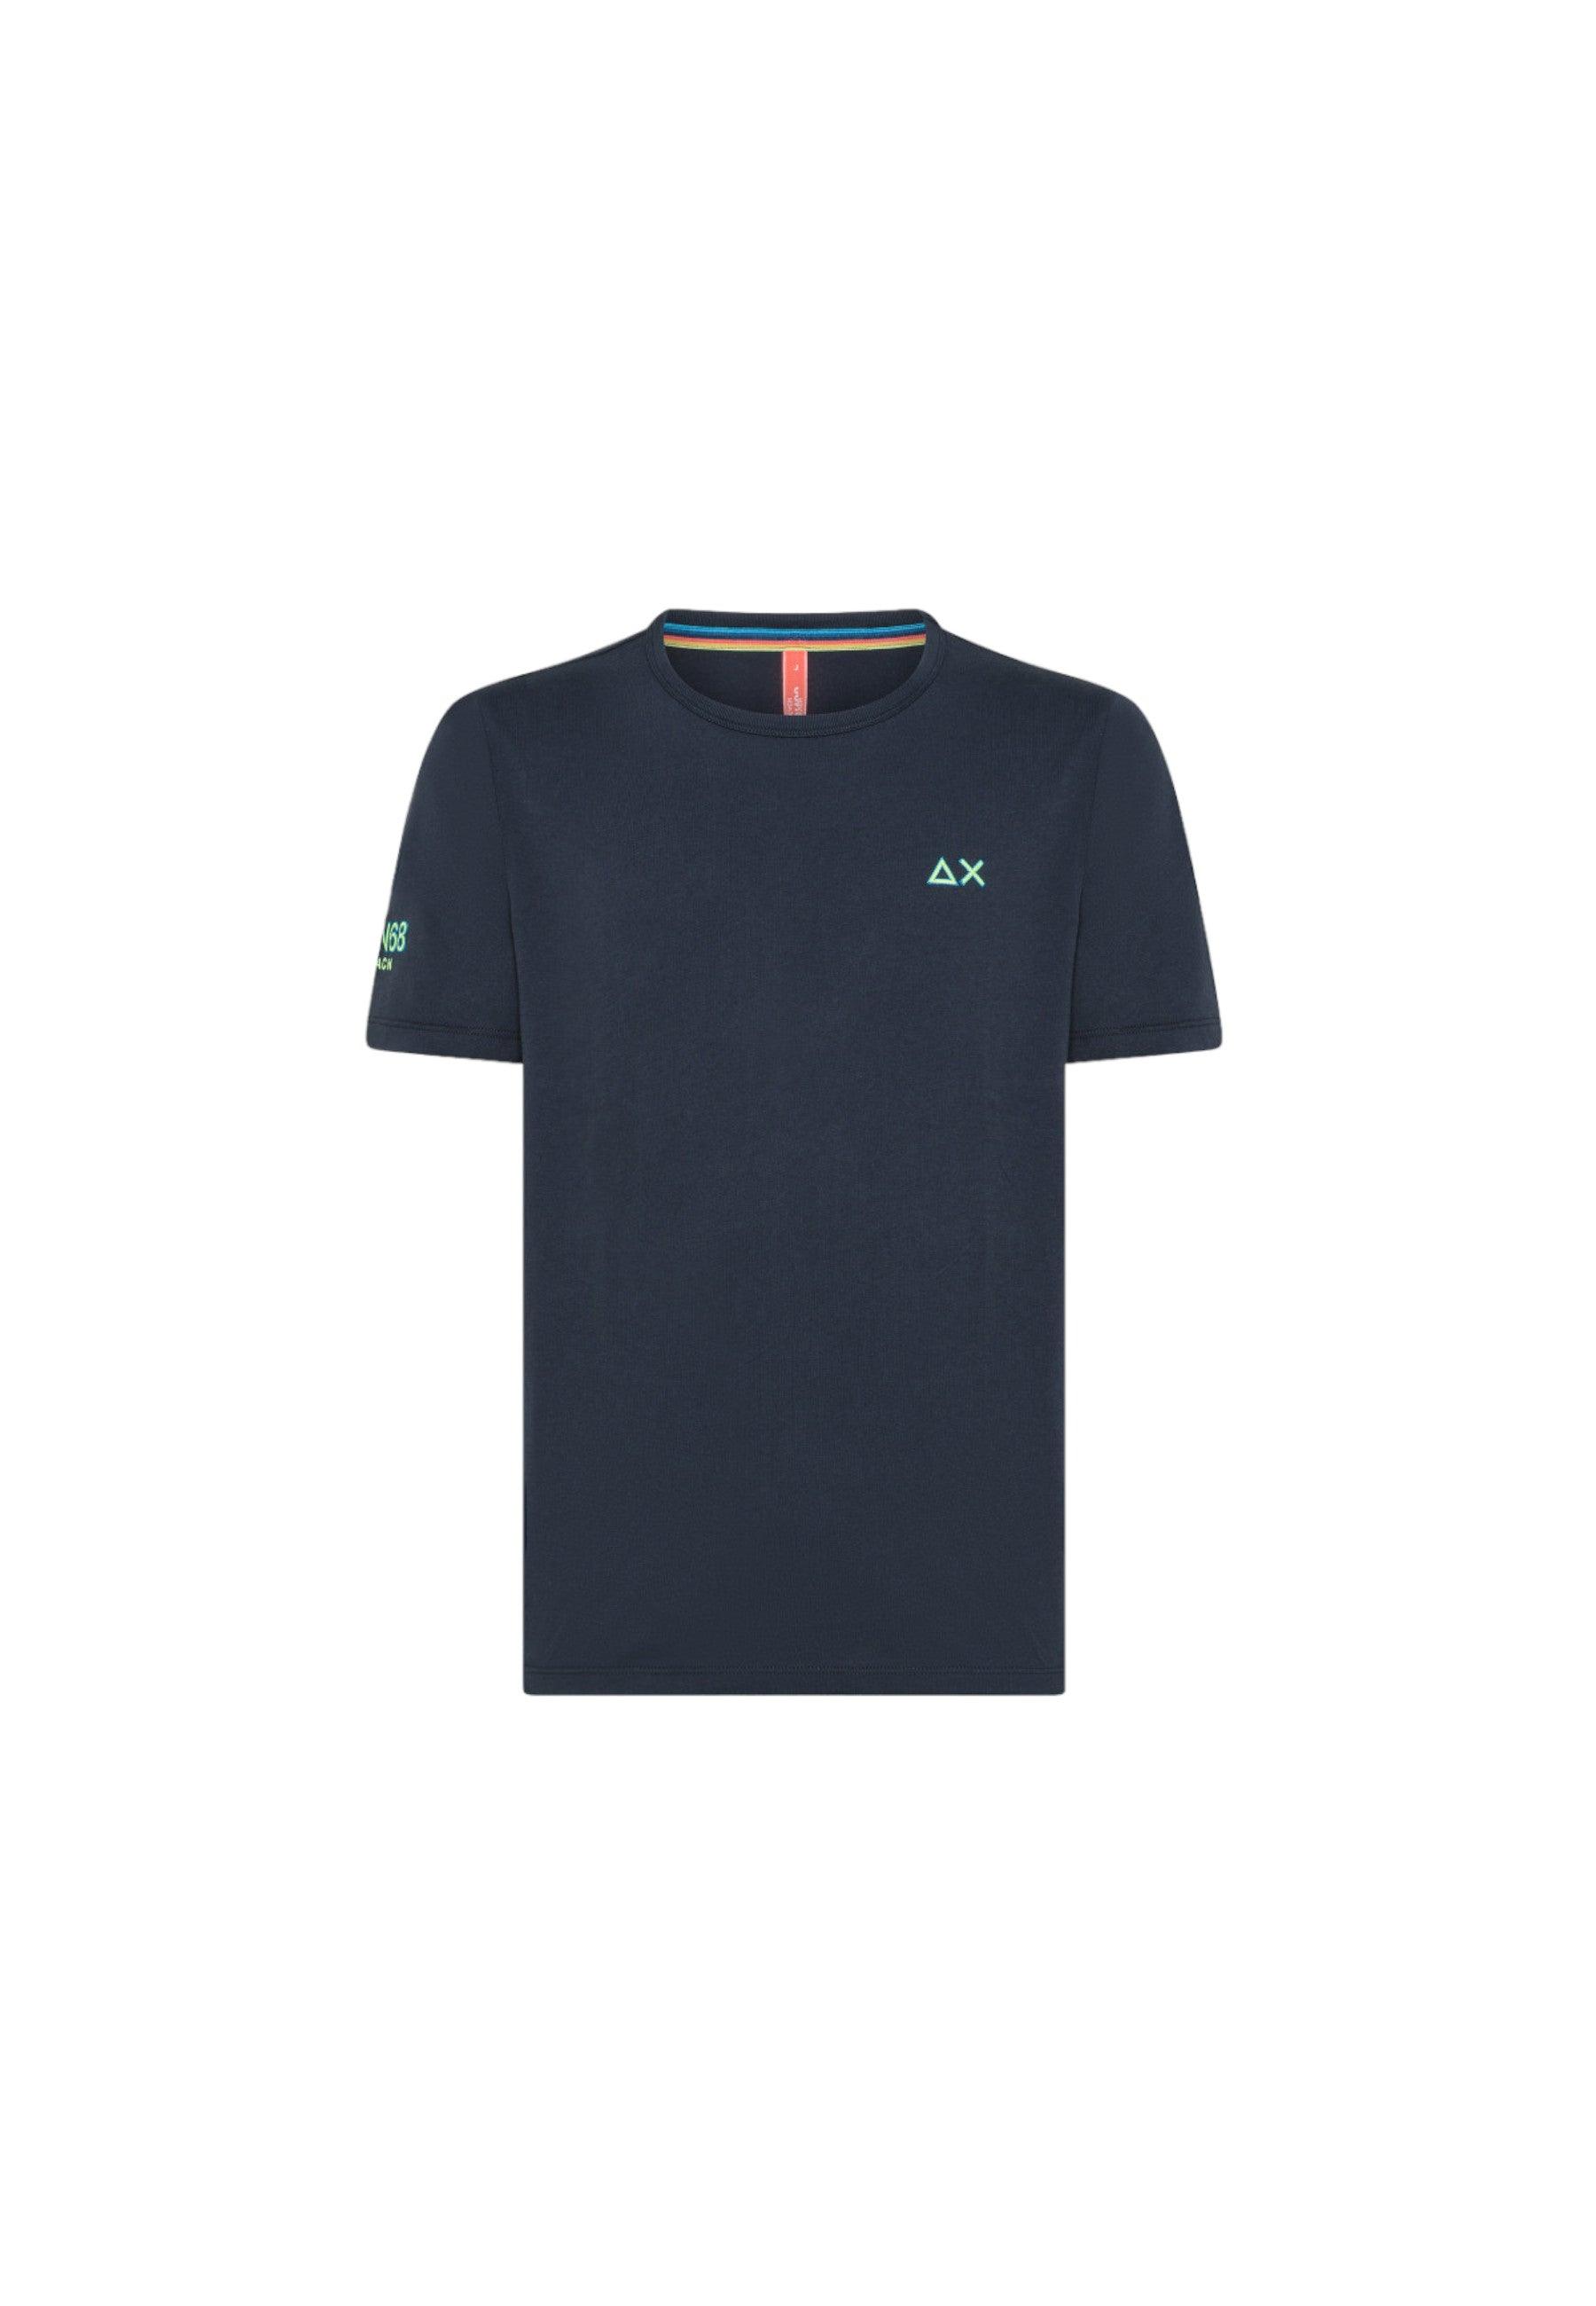 SUN68 Beachwear T-Shirt Maglietta Logo Blu T34140 - Sandrini Calzature e Abbigliamento